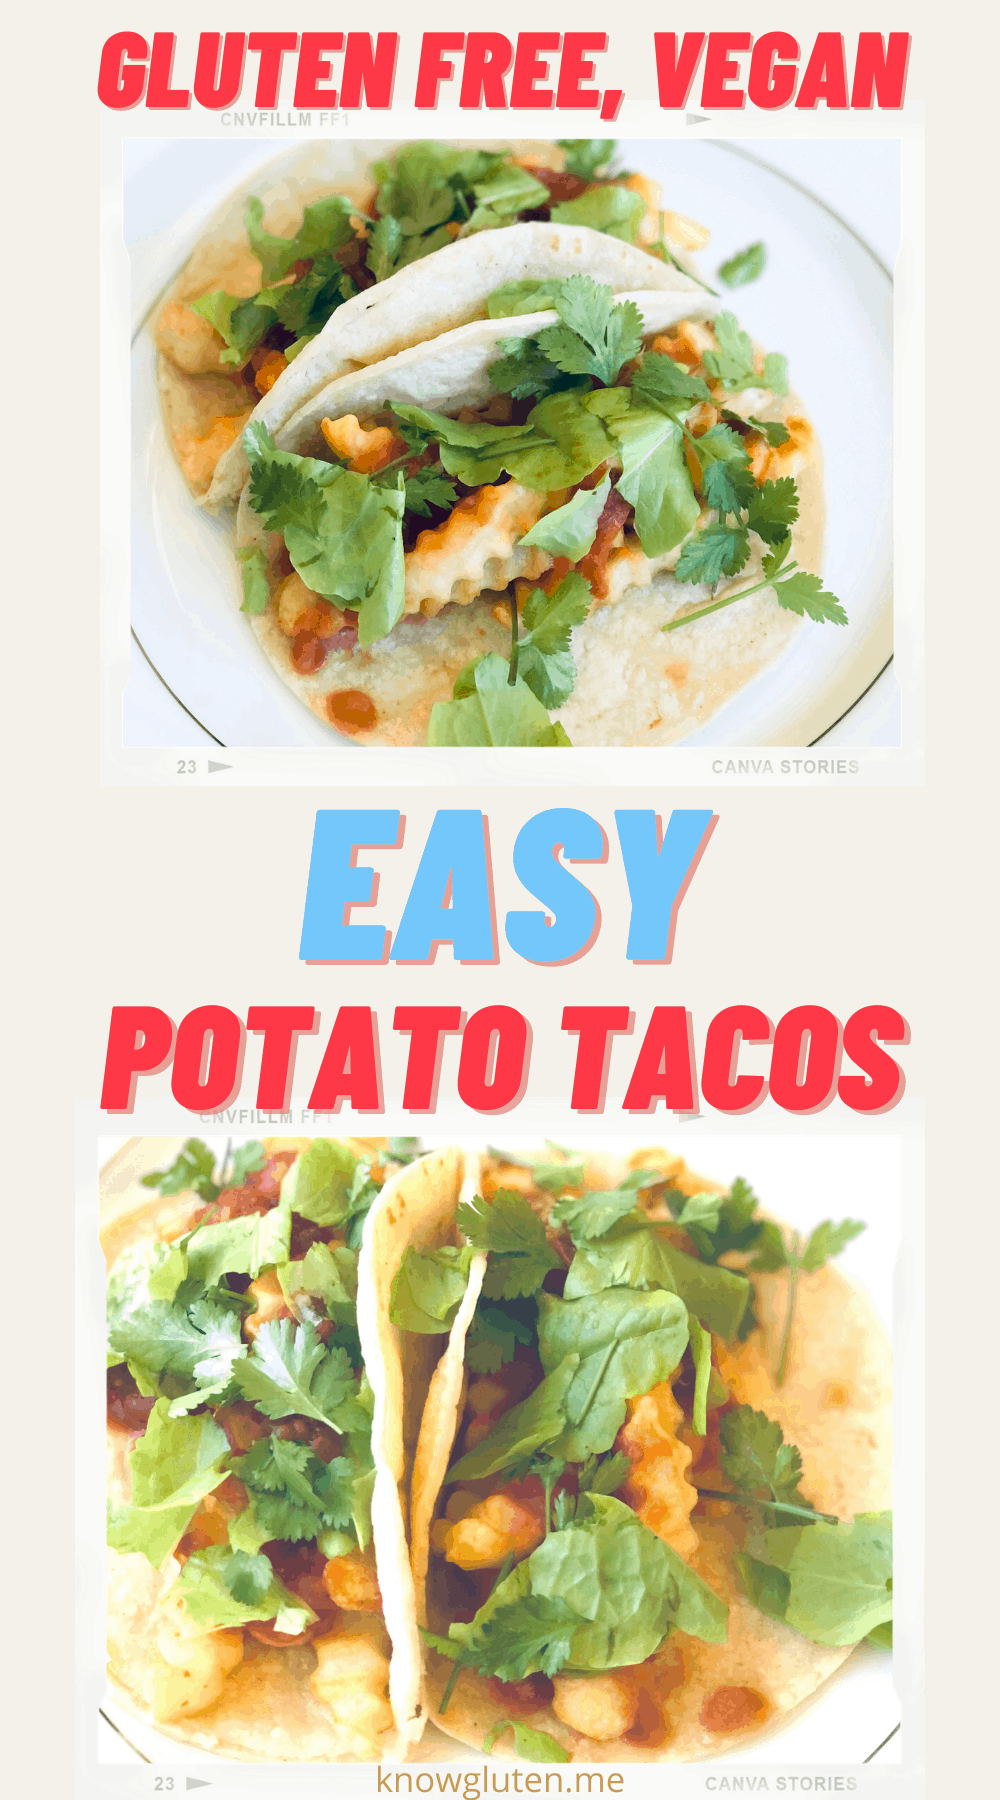 Gluten Free Potato Tacos - Vegan, Easy!